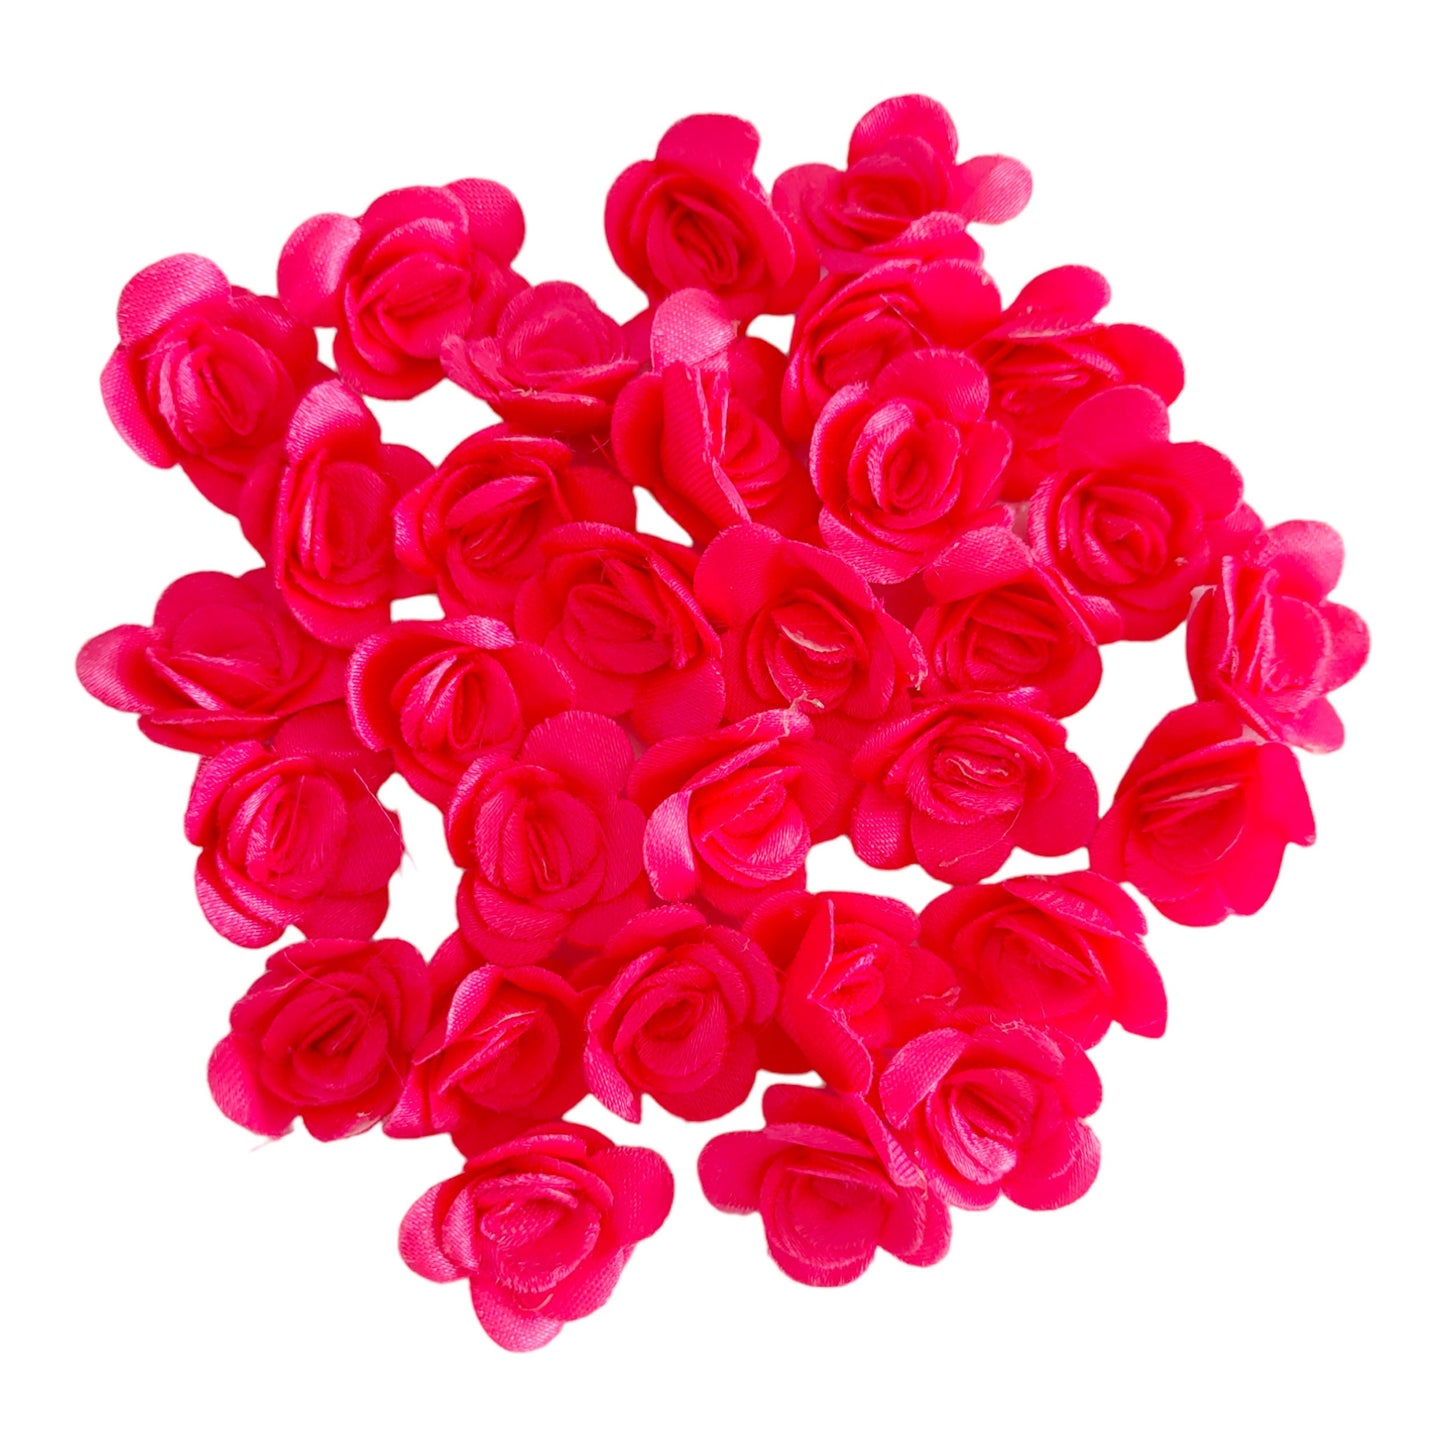 Decorative Artificial Mini Rose Fabric Flower for Decor Craft or Textile - 11132